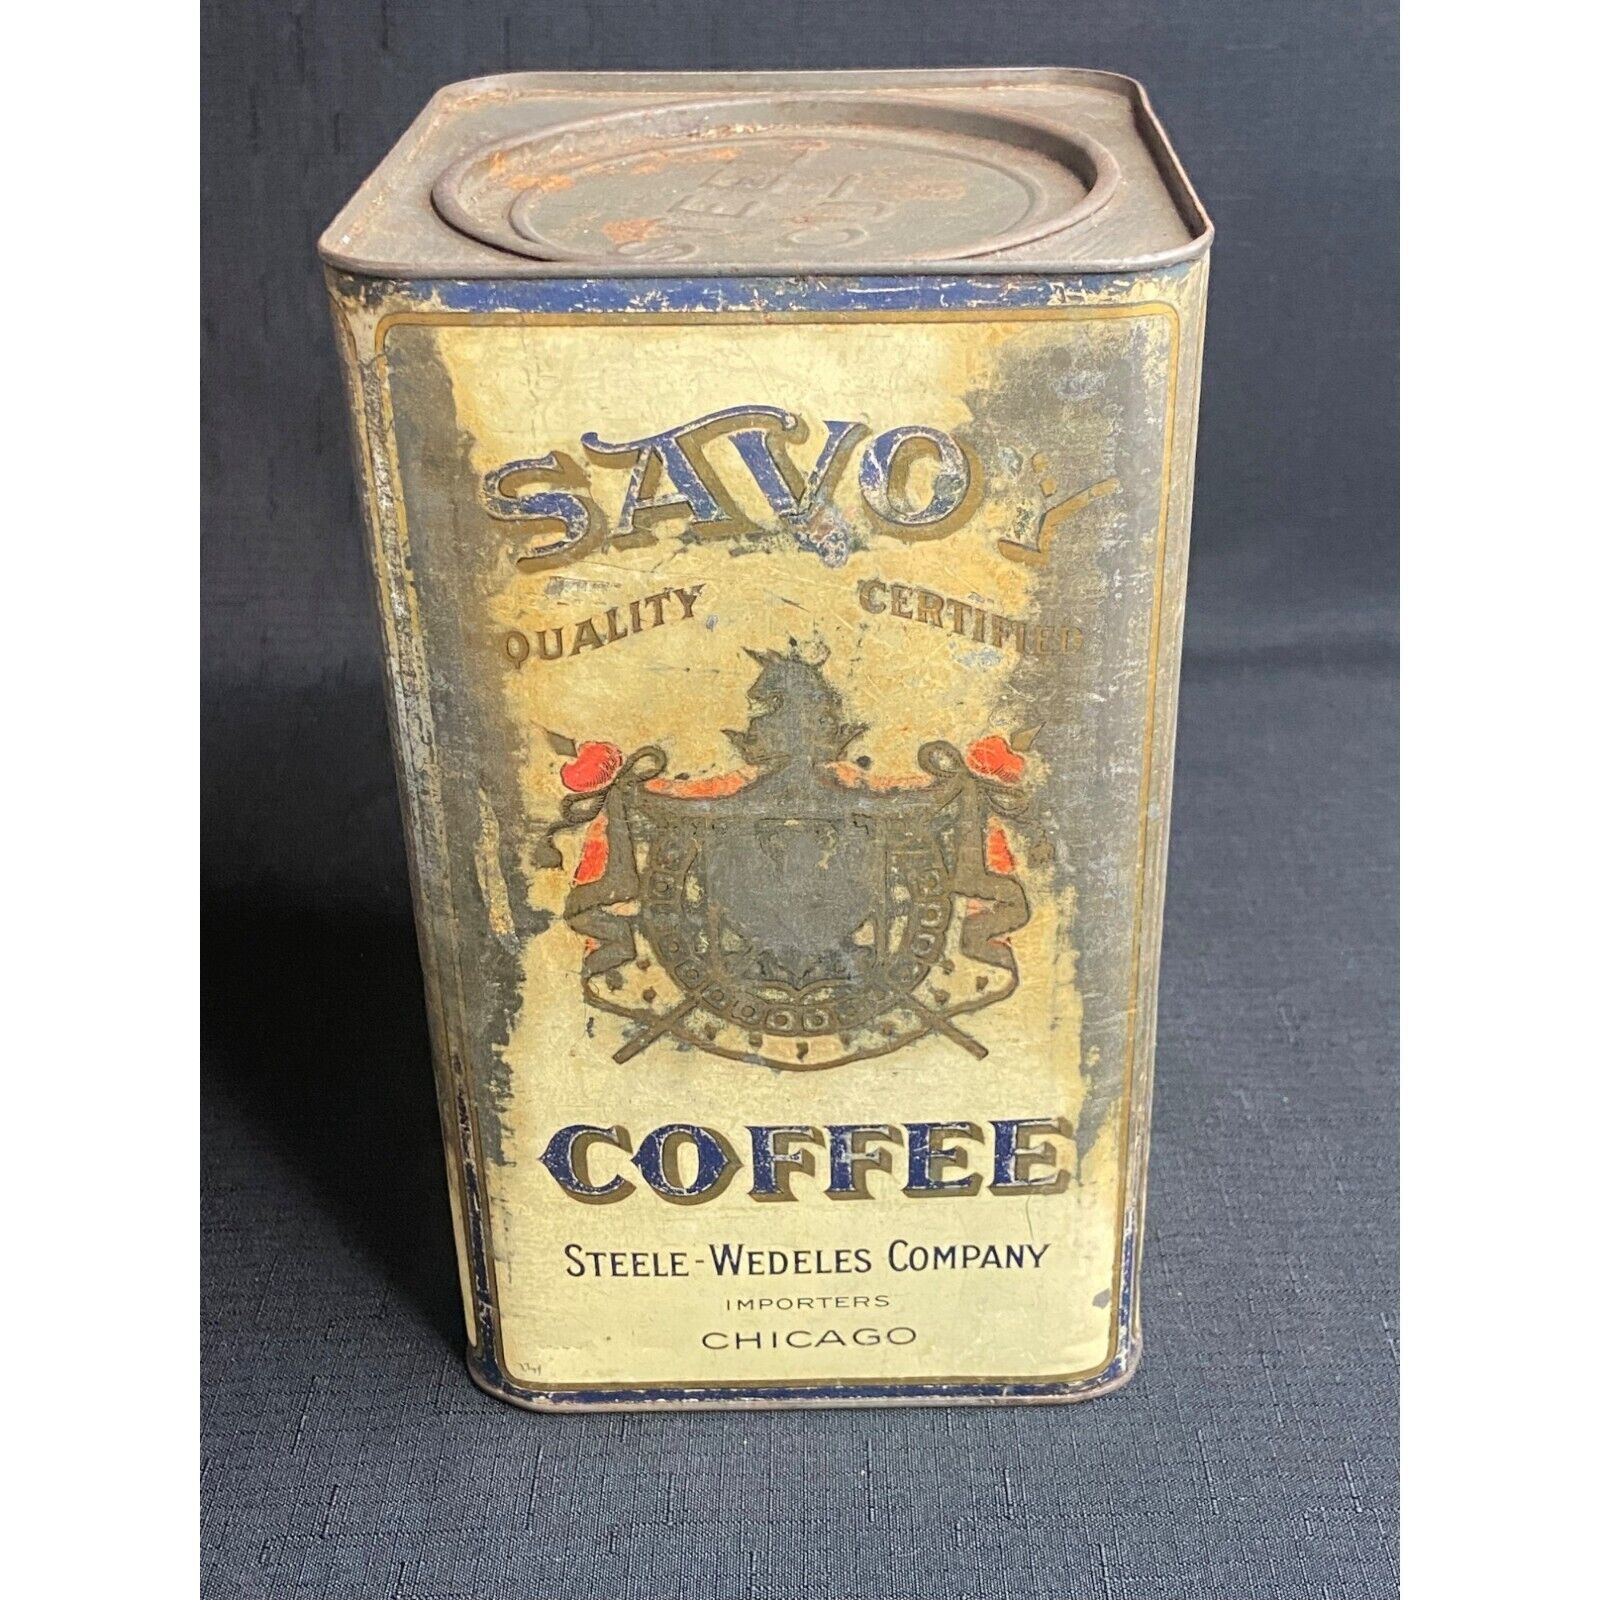 VINTAGE SAVOY SQUARE COFFEE TIN   ADVERTISING COLLECTIBLE